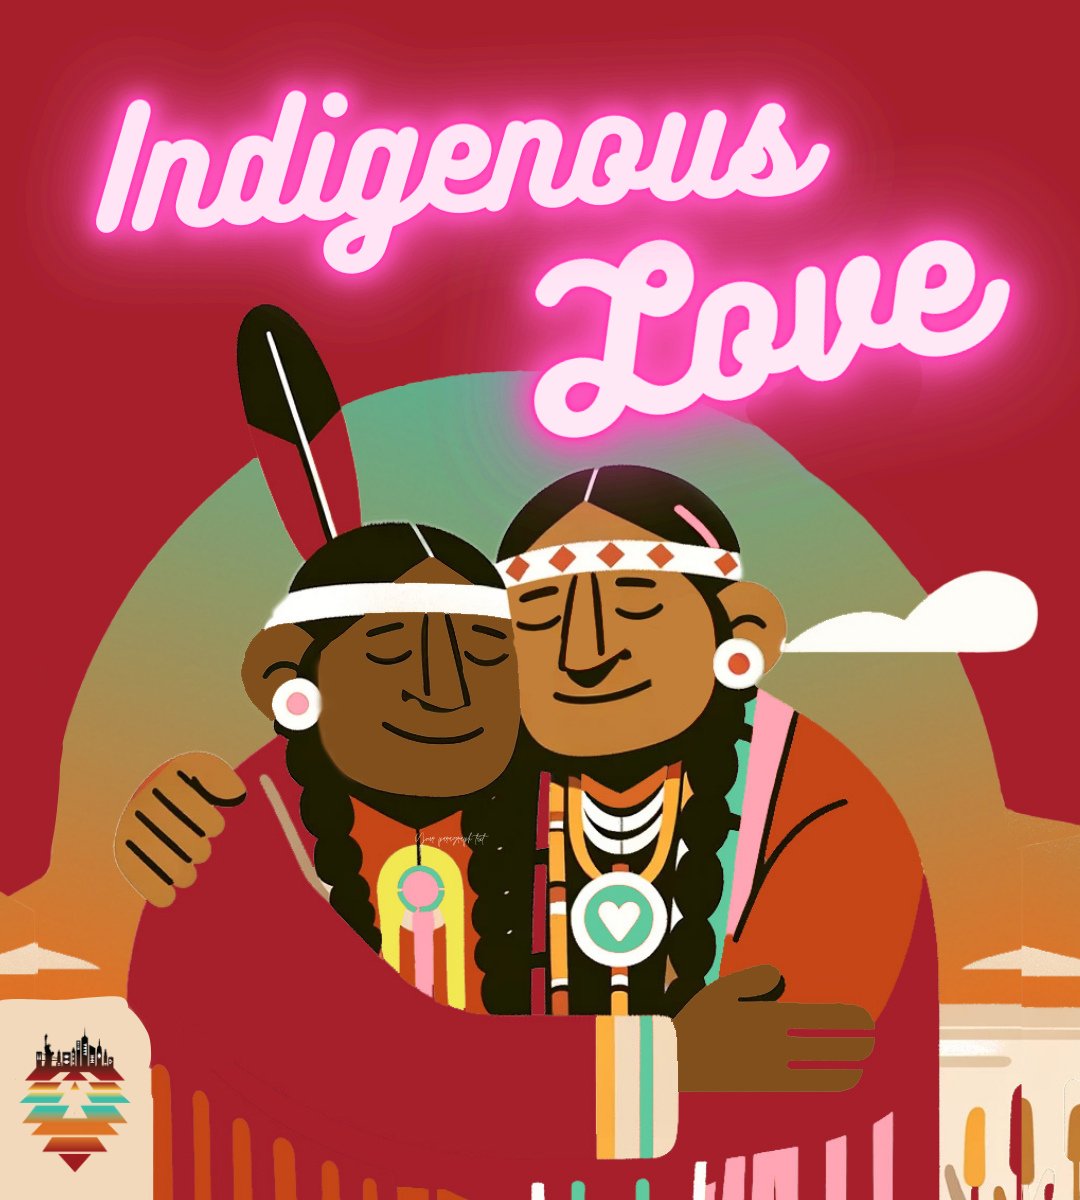 Happy Valentines Day ❤️ #IndigenousLove #INDIGENOUS #Love